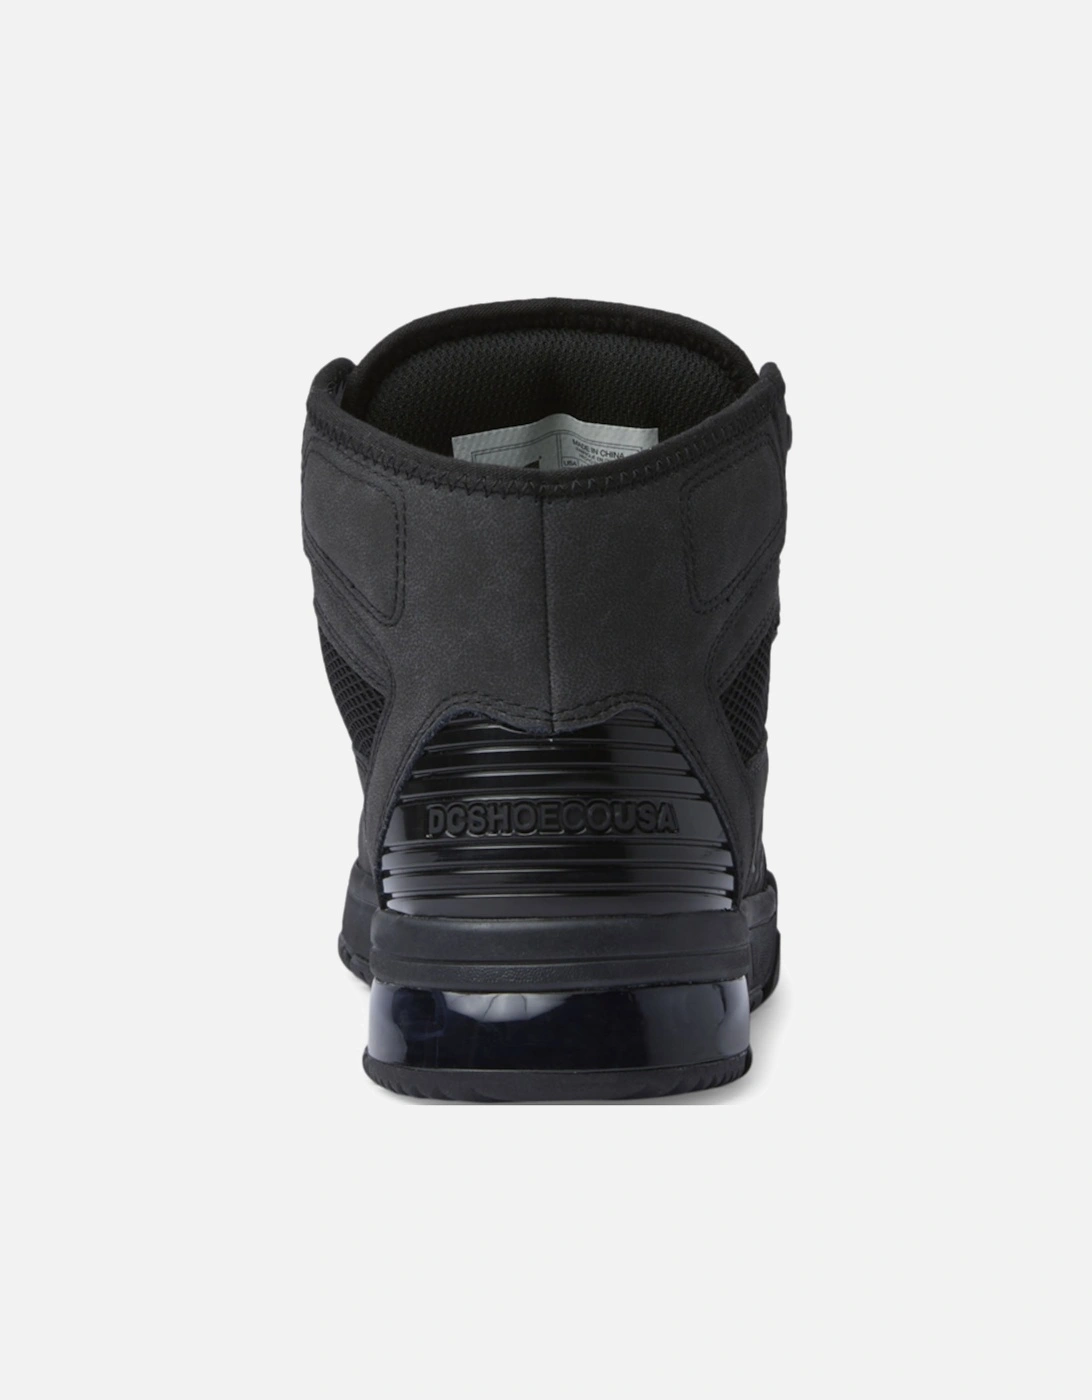 Mens Versatile Mid Rise Leather Boots - Black